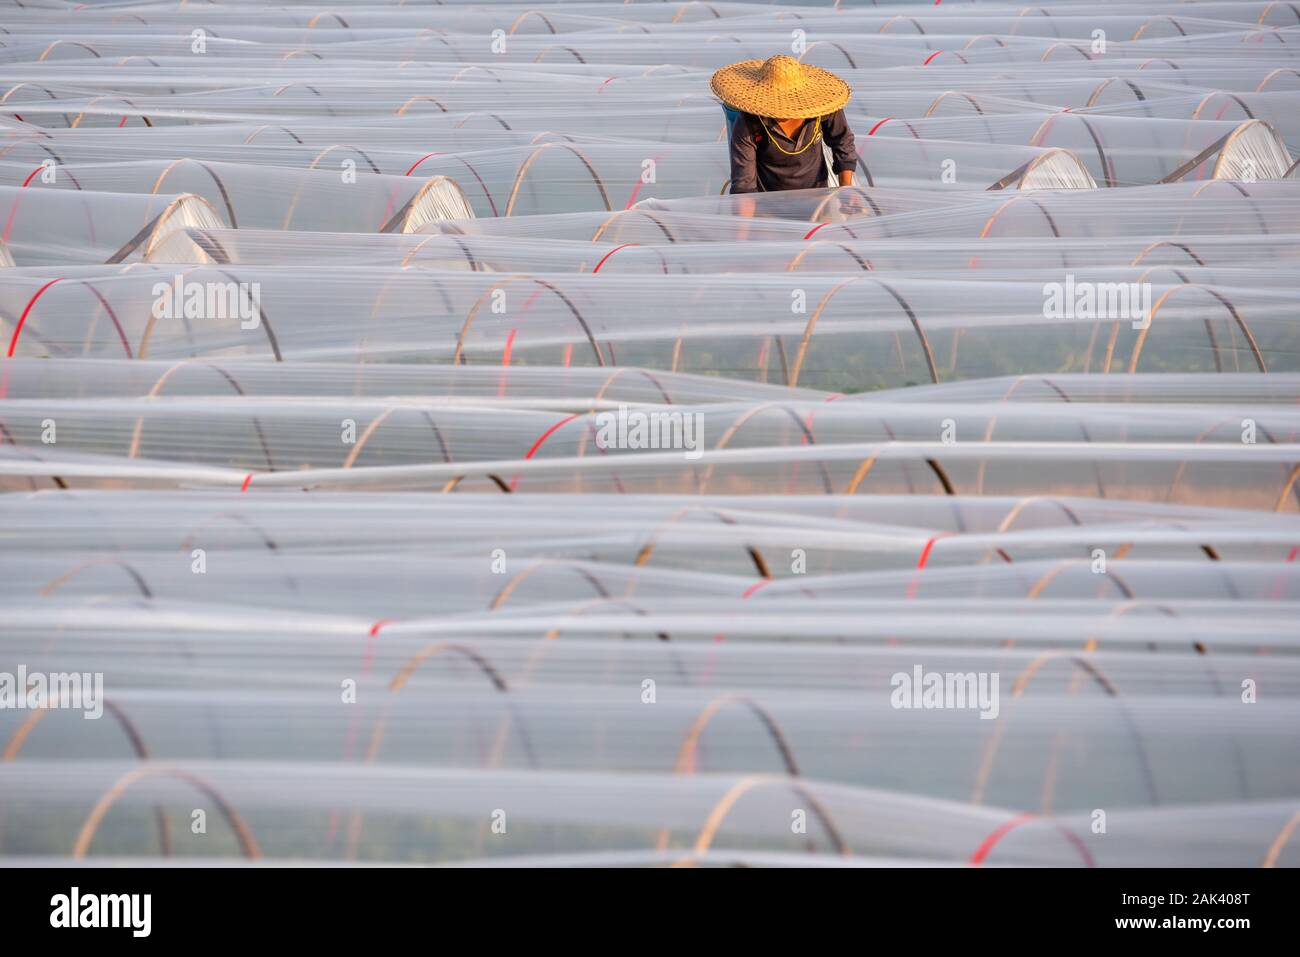 Yangshuo, Guilin, provincia di Guangxi, Cina - Nov 10, 2019 : agricoltore cinese la spruzzatura di pesticidi su piante in serra Foto Stock